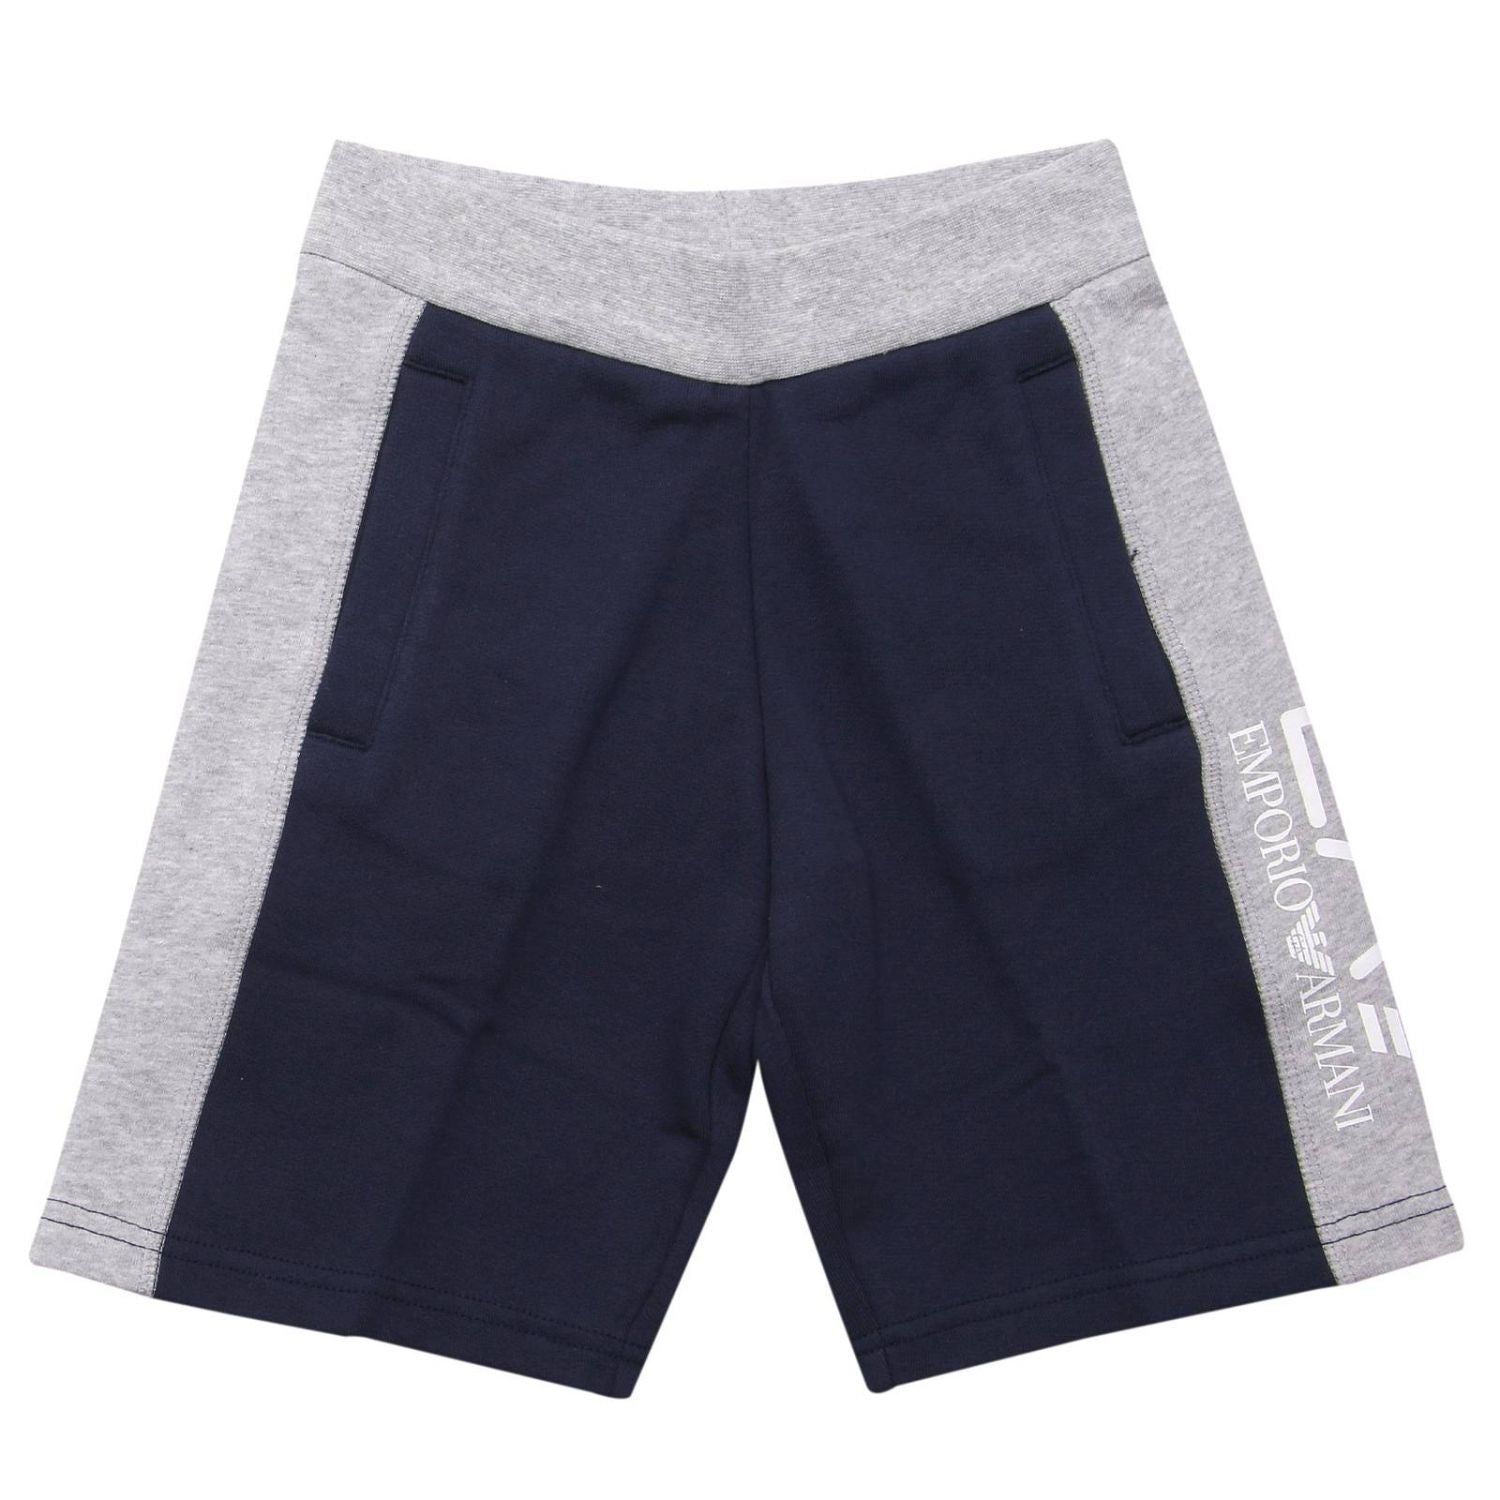 Pantalón corto EA7 Emporio Armani Junior - Azul/Gris